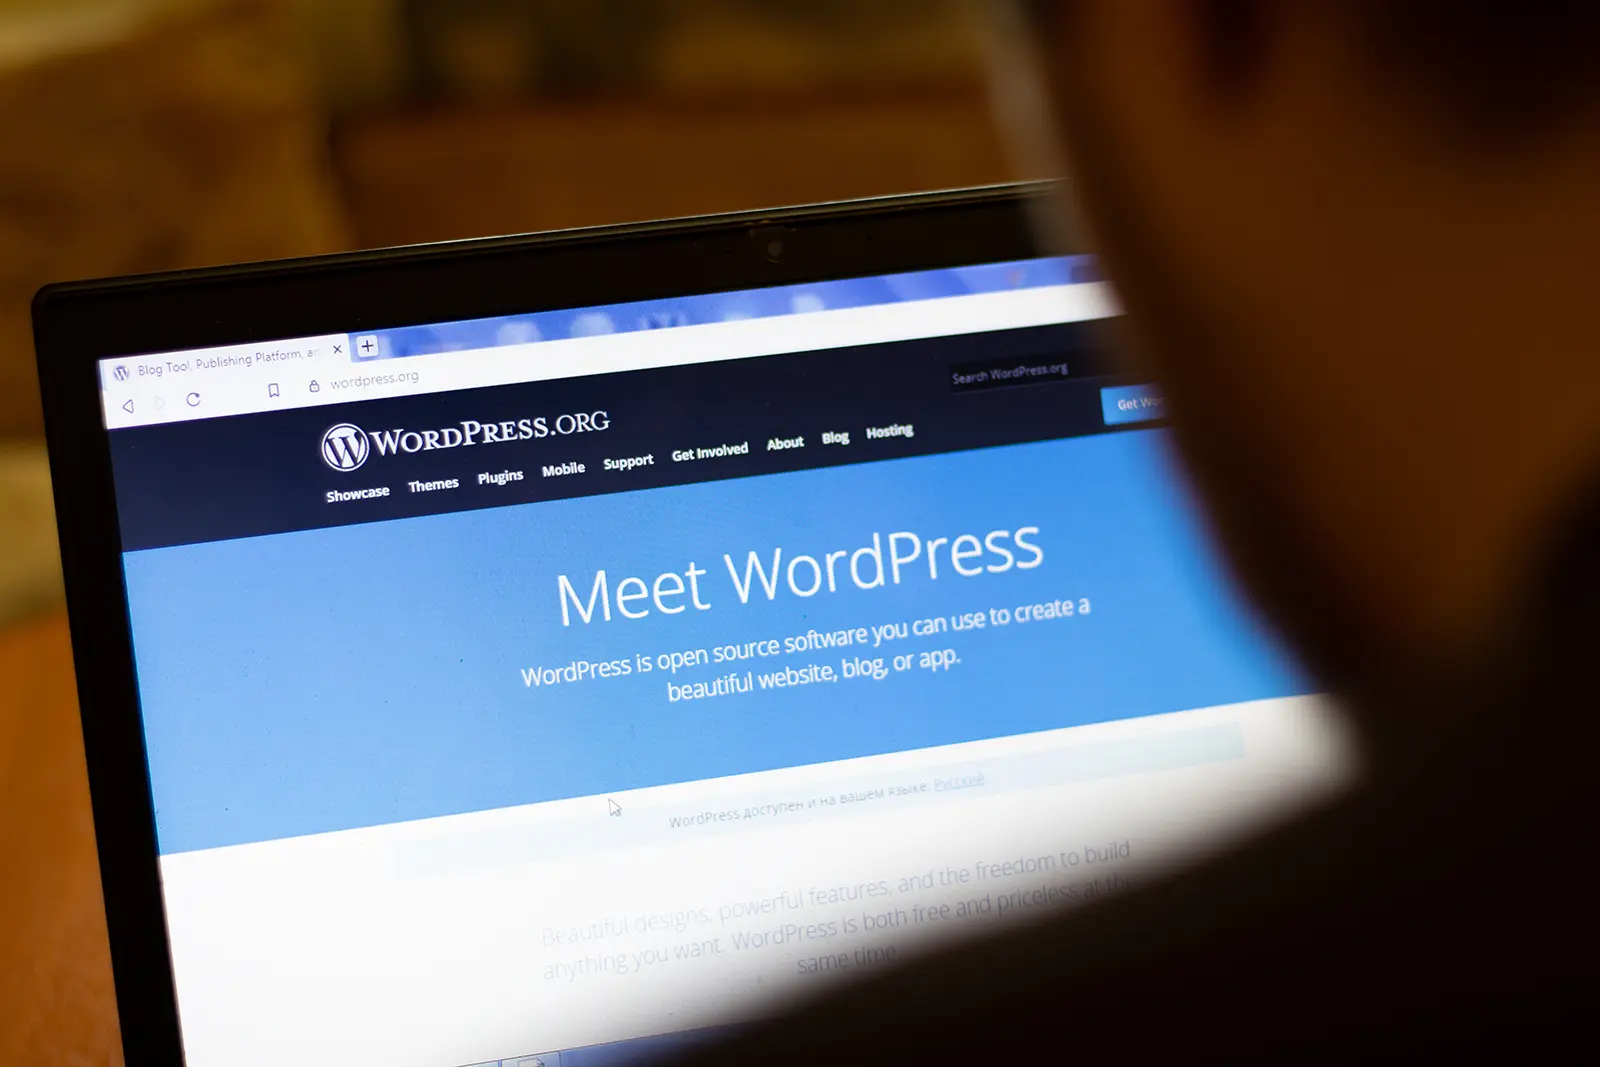 WordPress Agentur